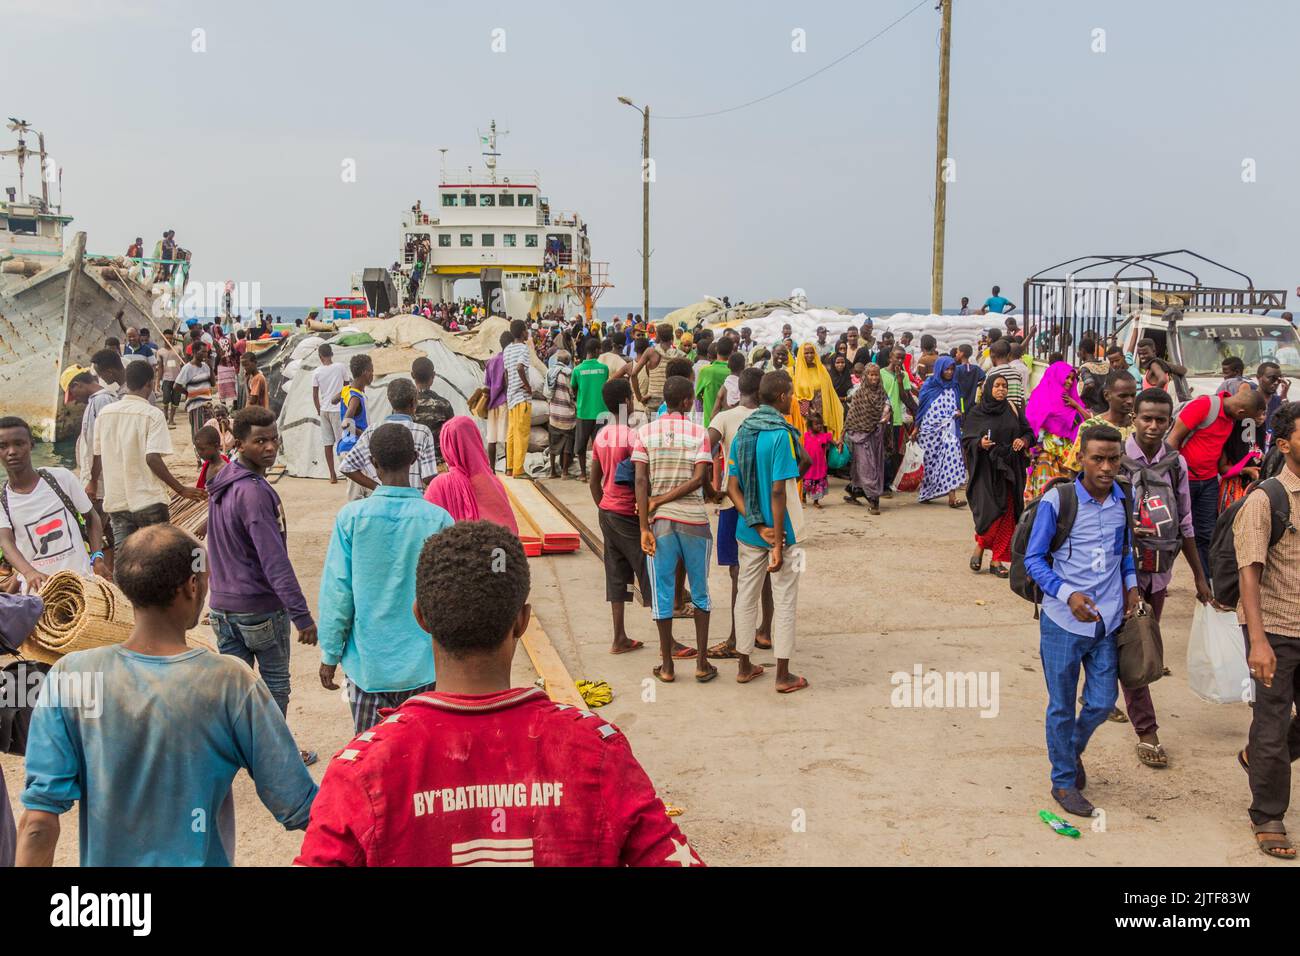 TADJOURA, DJIBOUTI - APRIL 20, 2019: Crowds of people leaving a ferry in the port of Tadjoura, Djibouti Stock Photo